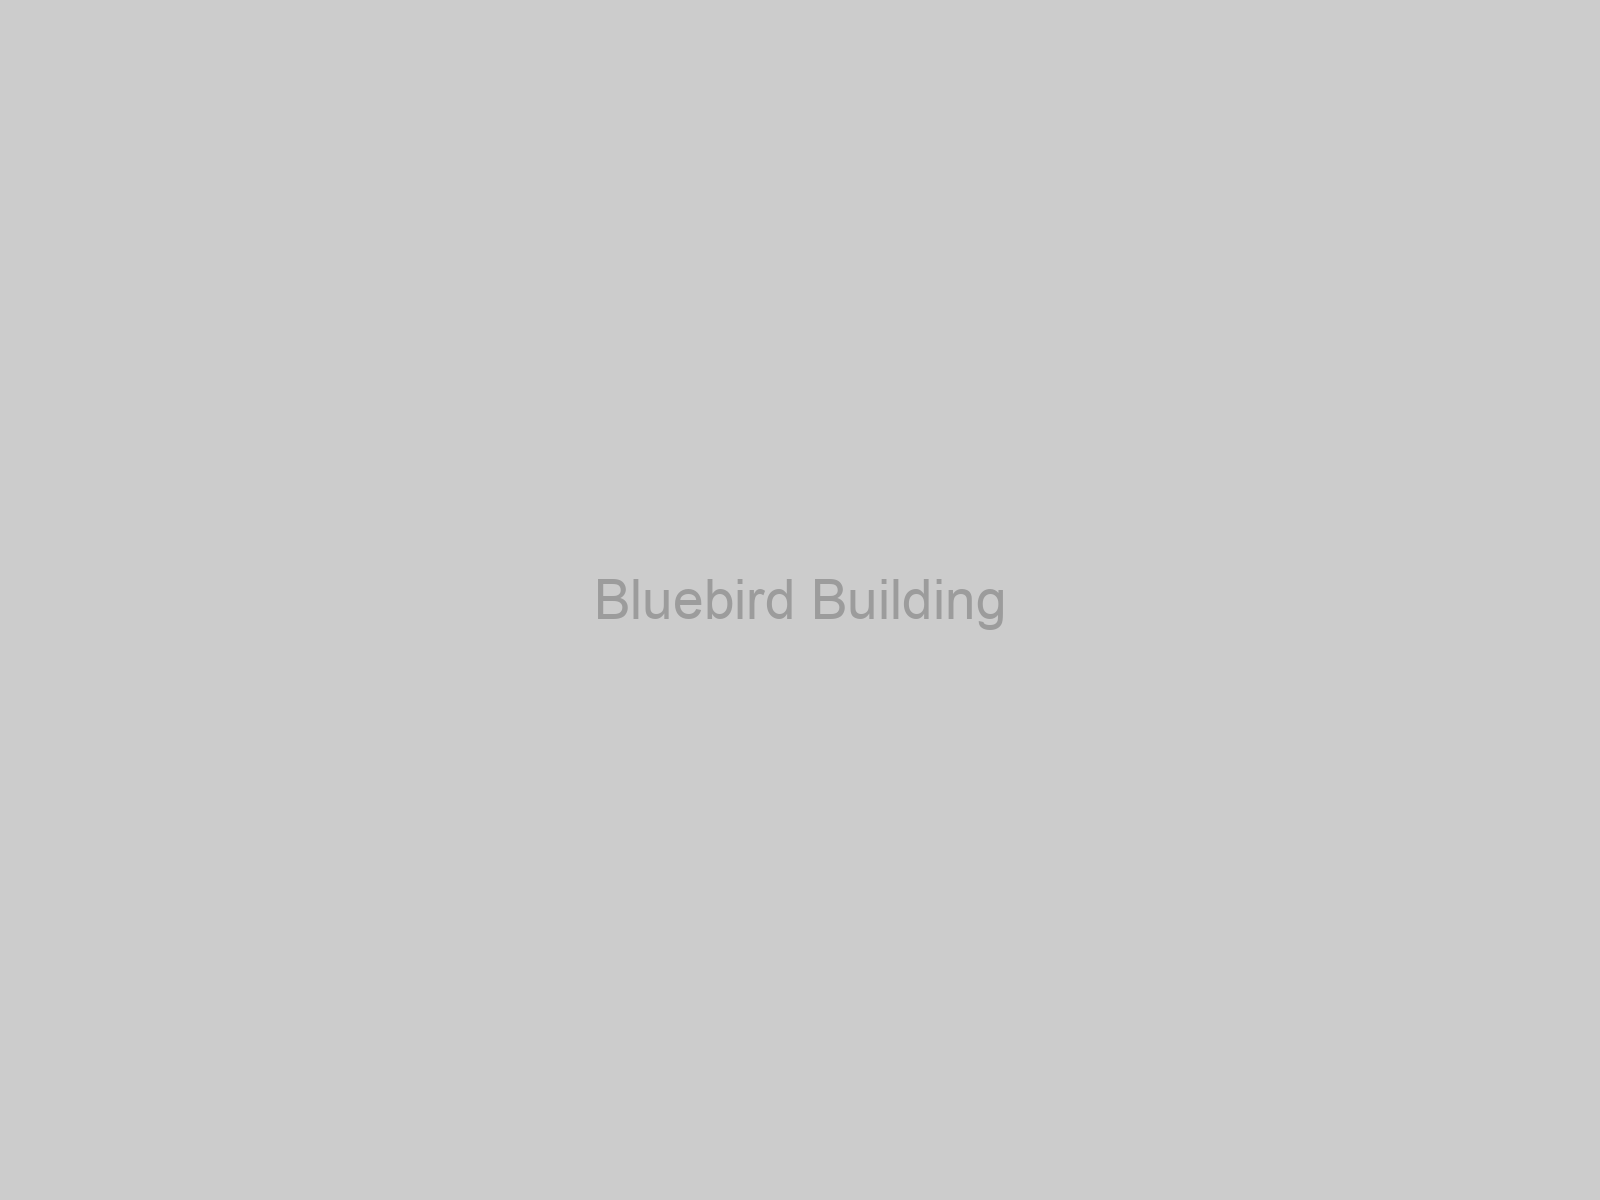 Bluebird Building